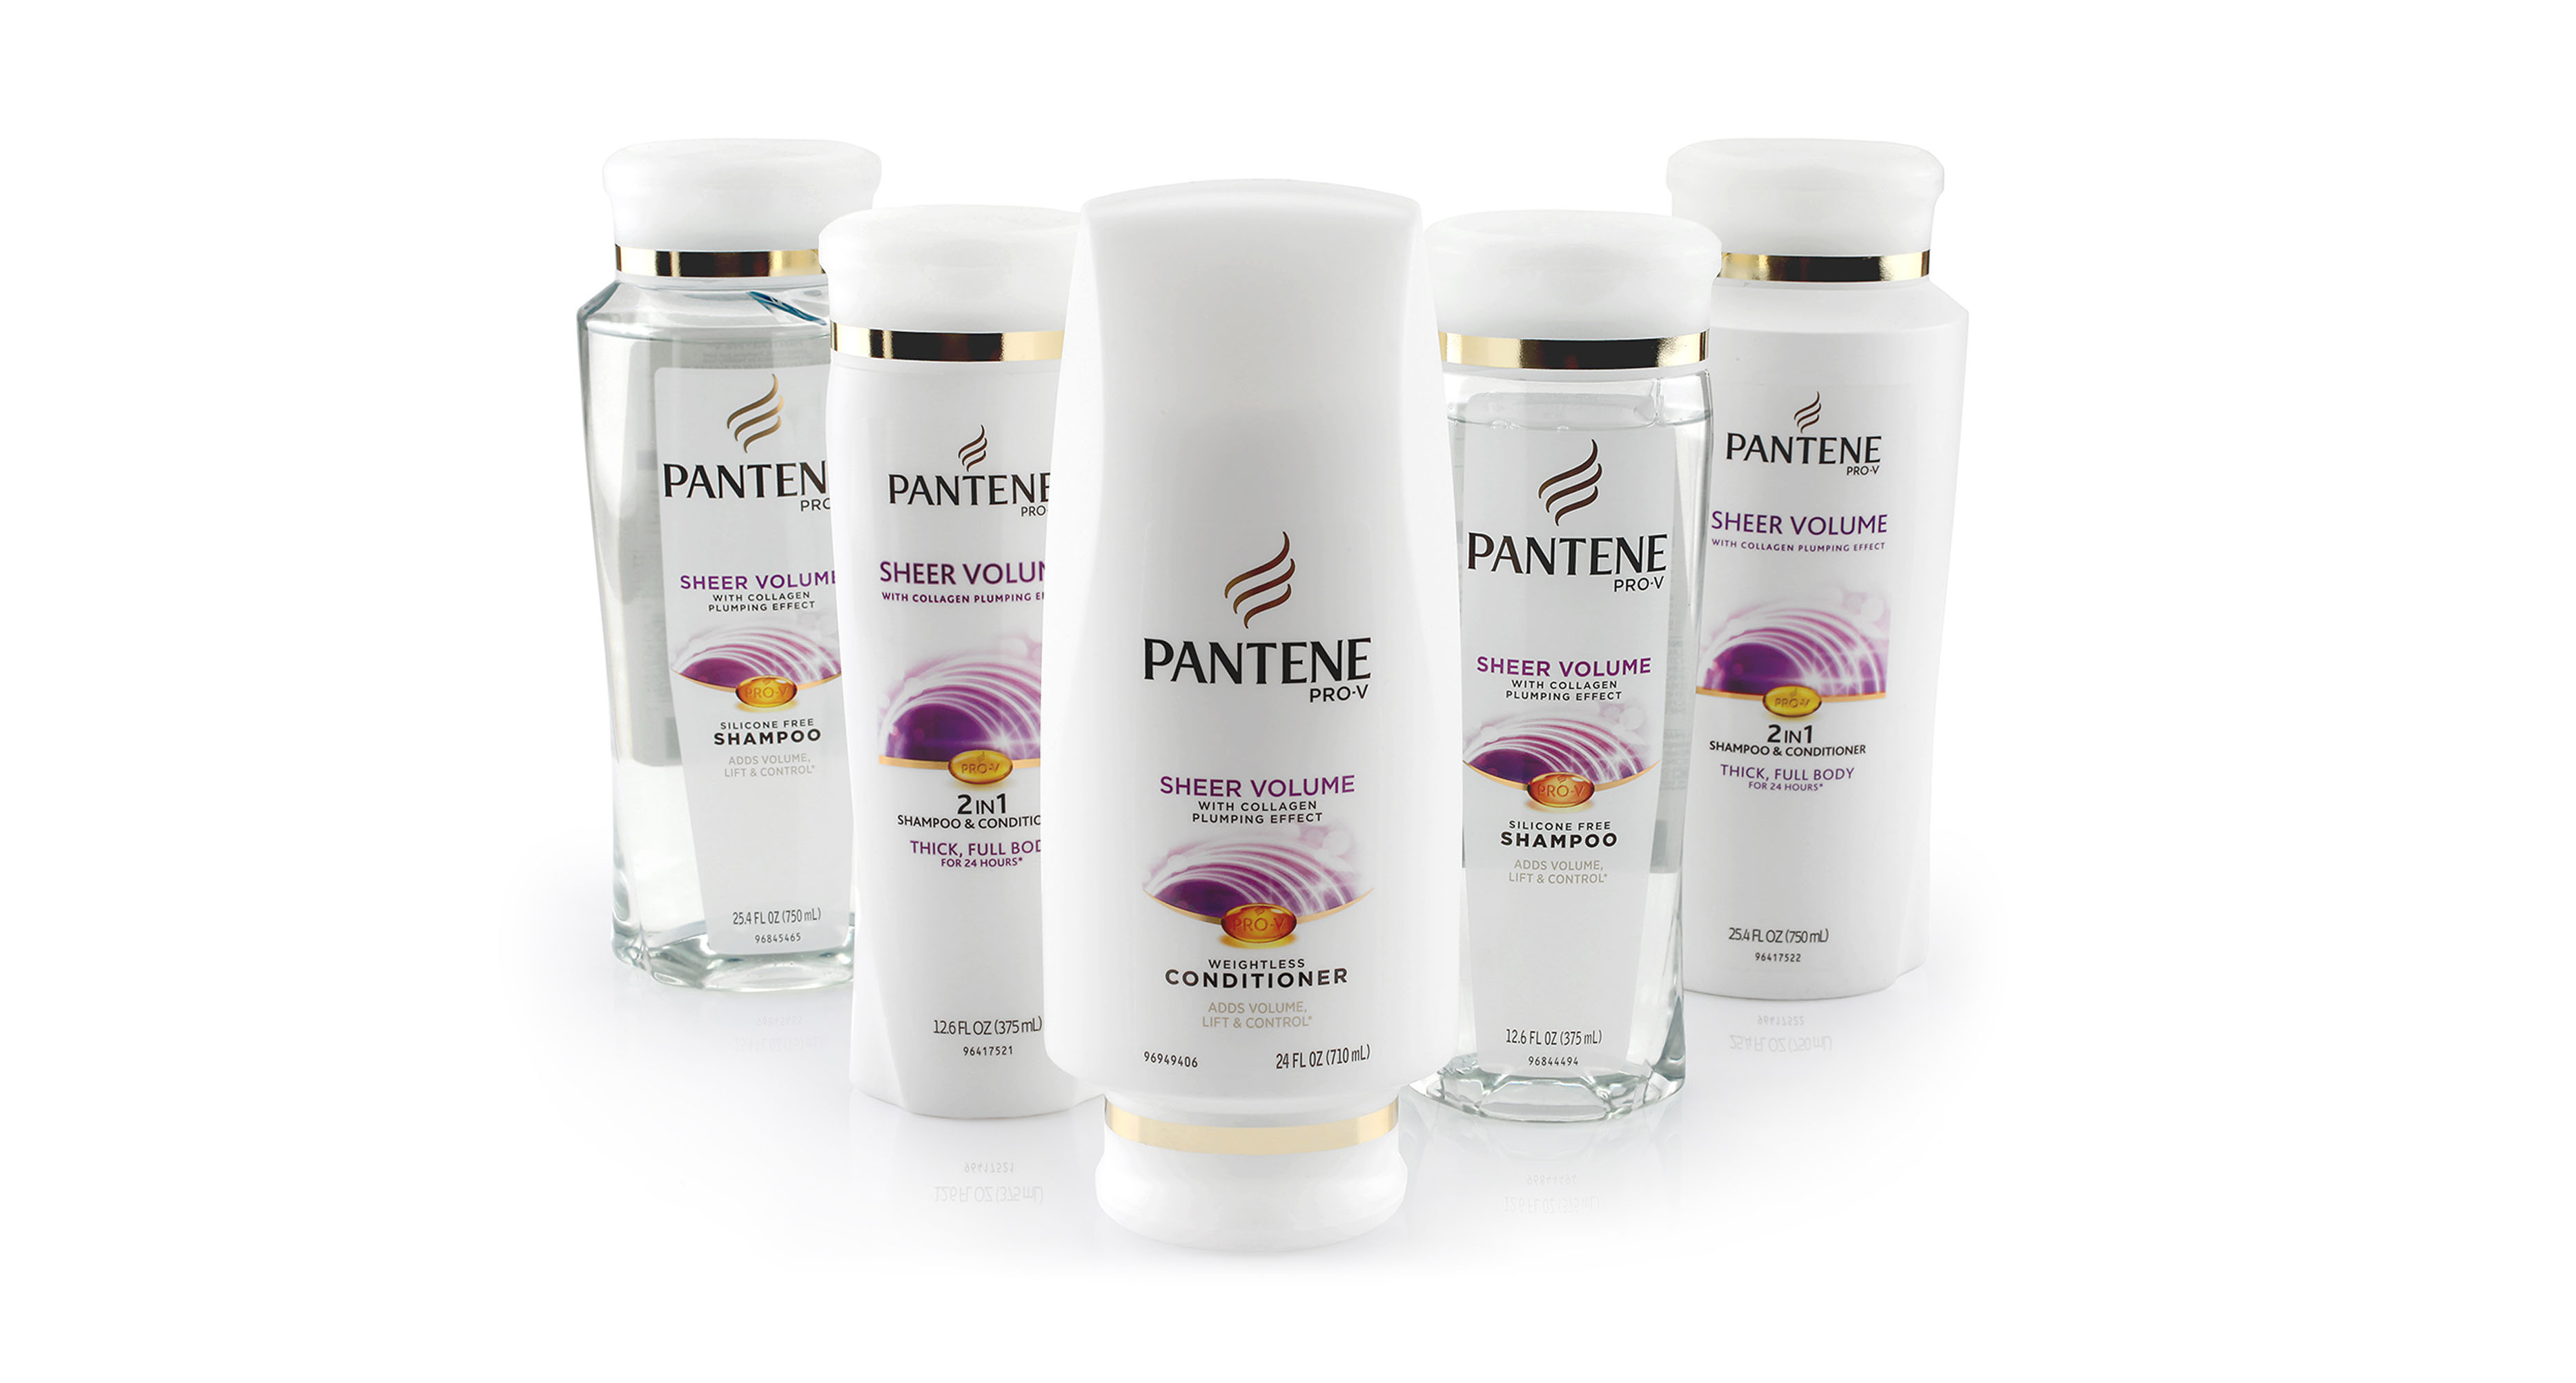 Standard existing Pantene shampoo bottles.